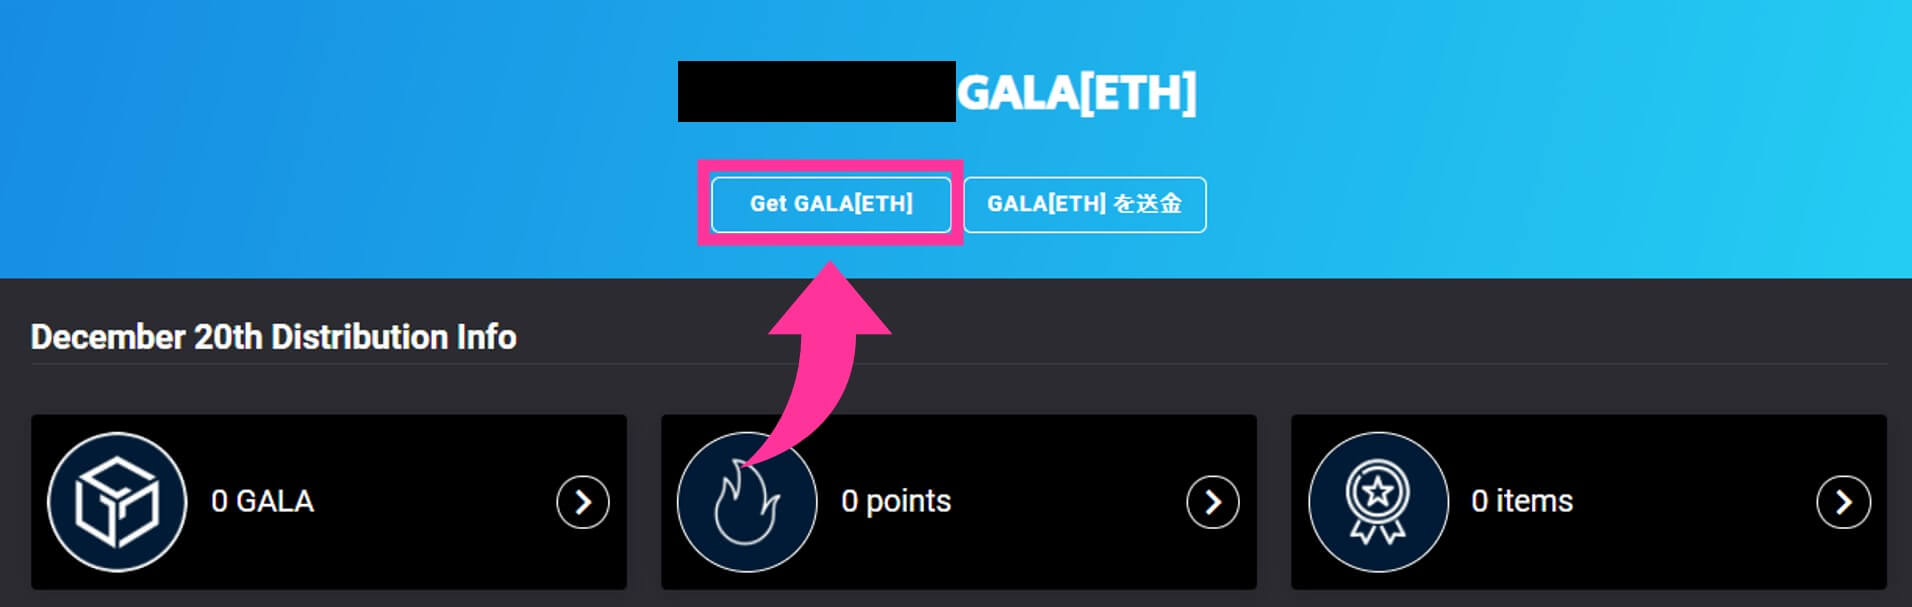 「Get GALA[ETH]」を選択